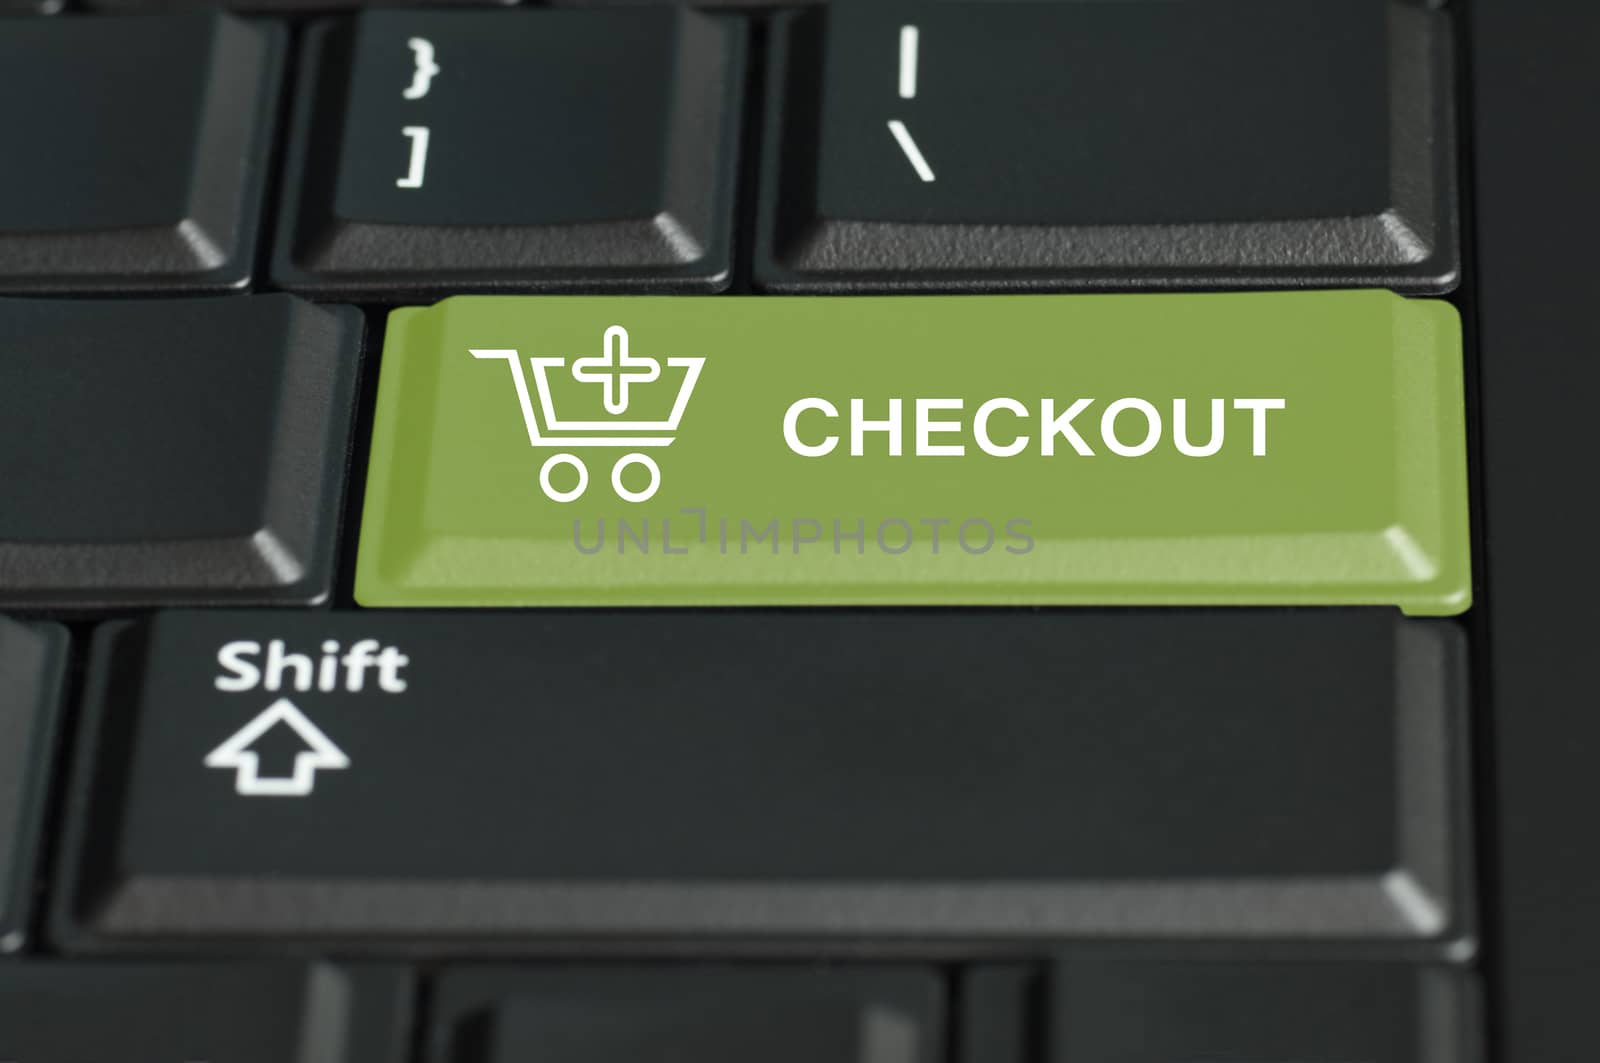 Checkout button on enter key by daoleduc